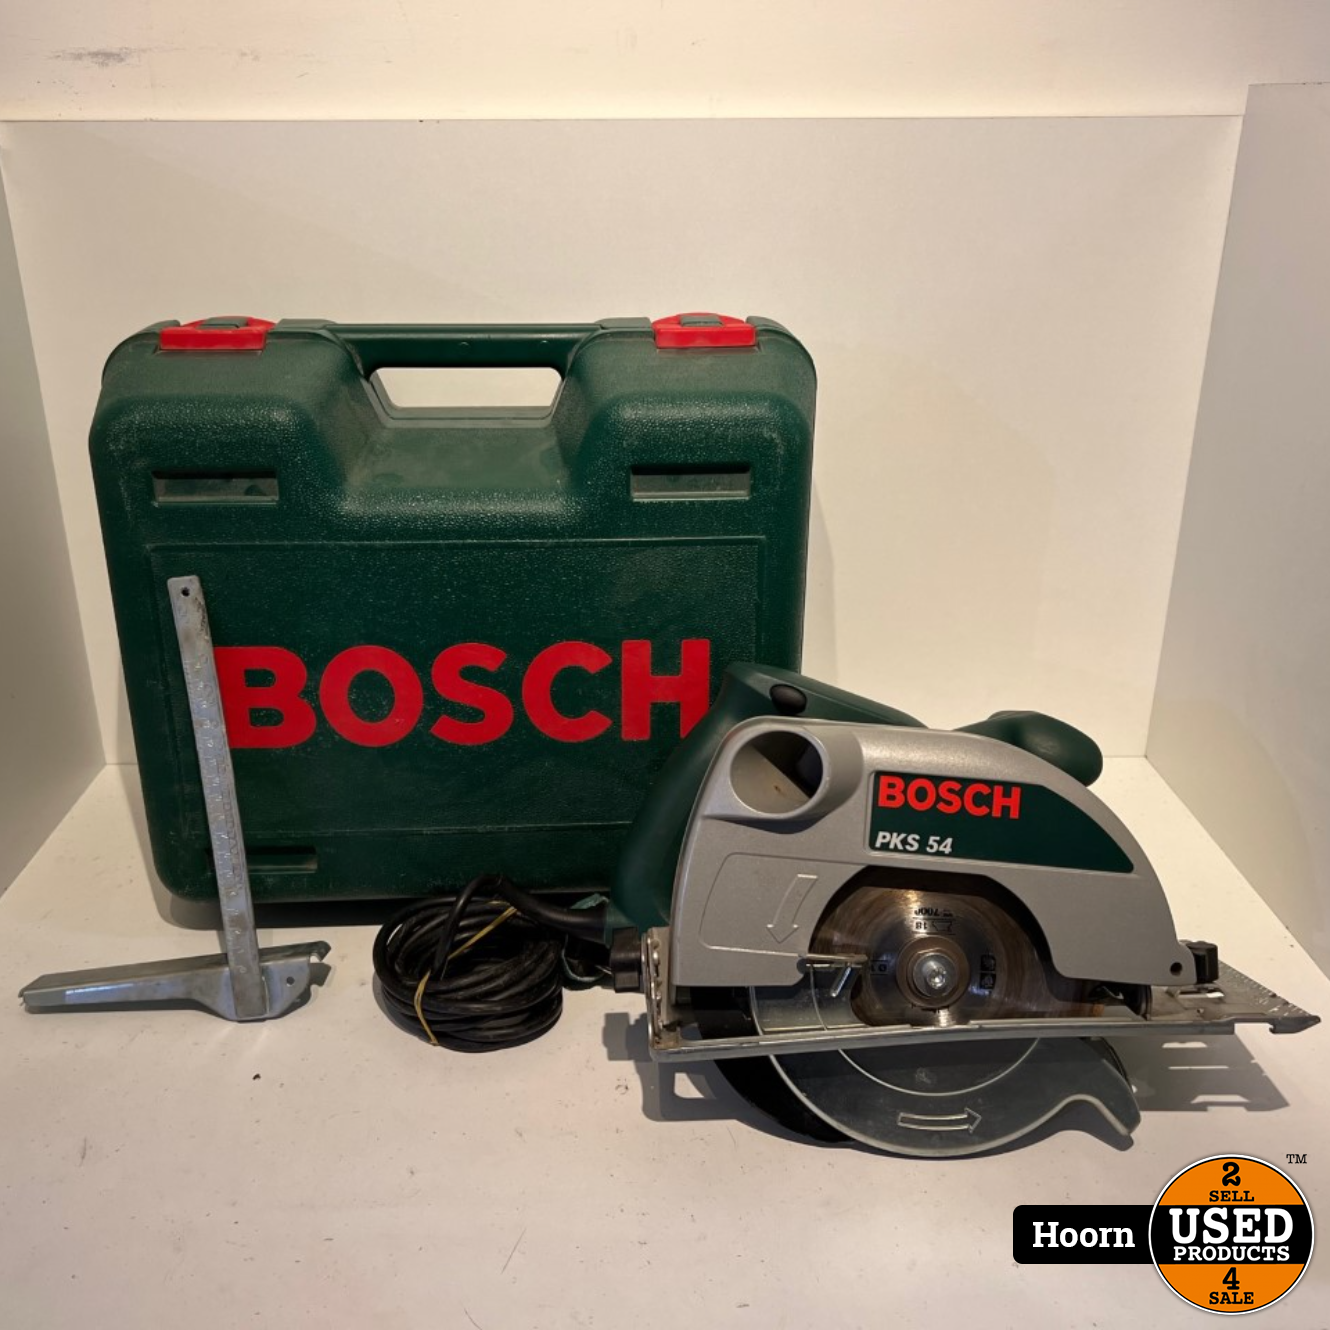 Bosch PKS 54 Cirkelzaag 1050W in Koffer - Products Hoorn